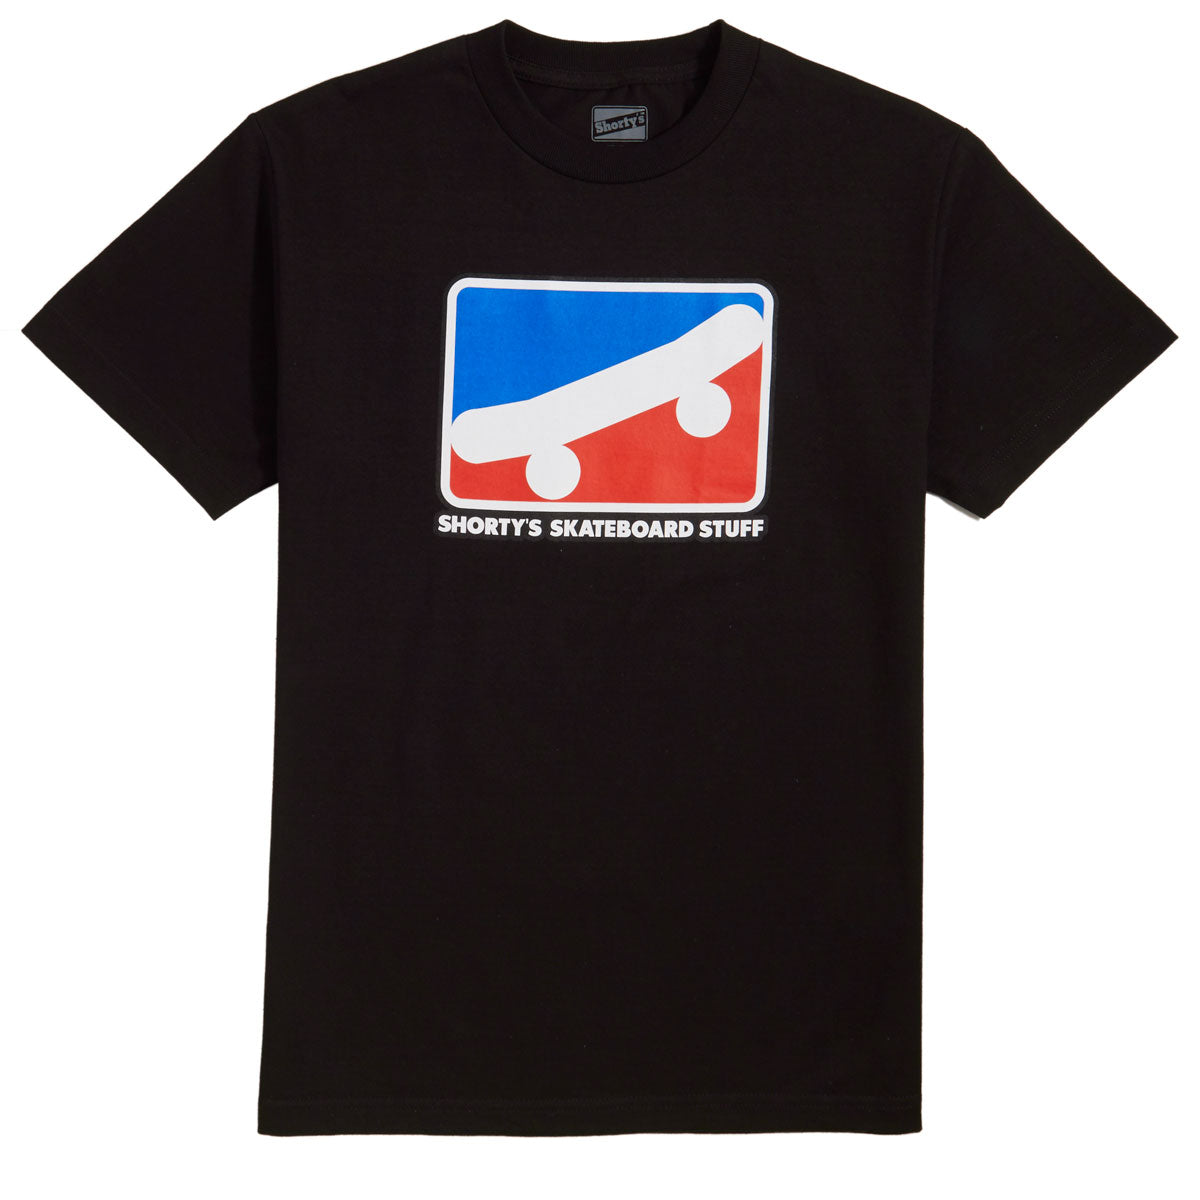 Shorty's Skate Icon T-Shirt - Black image 1